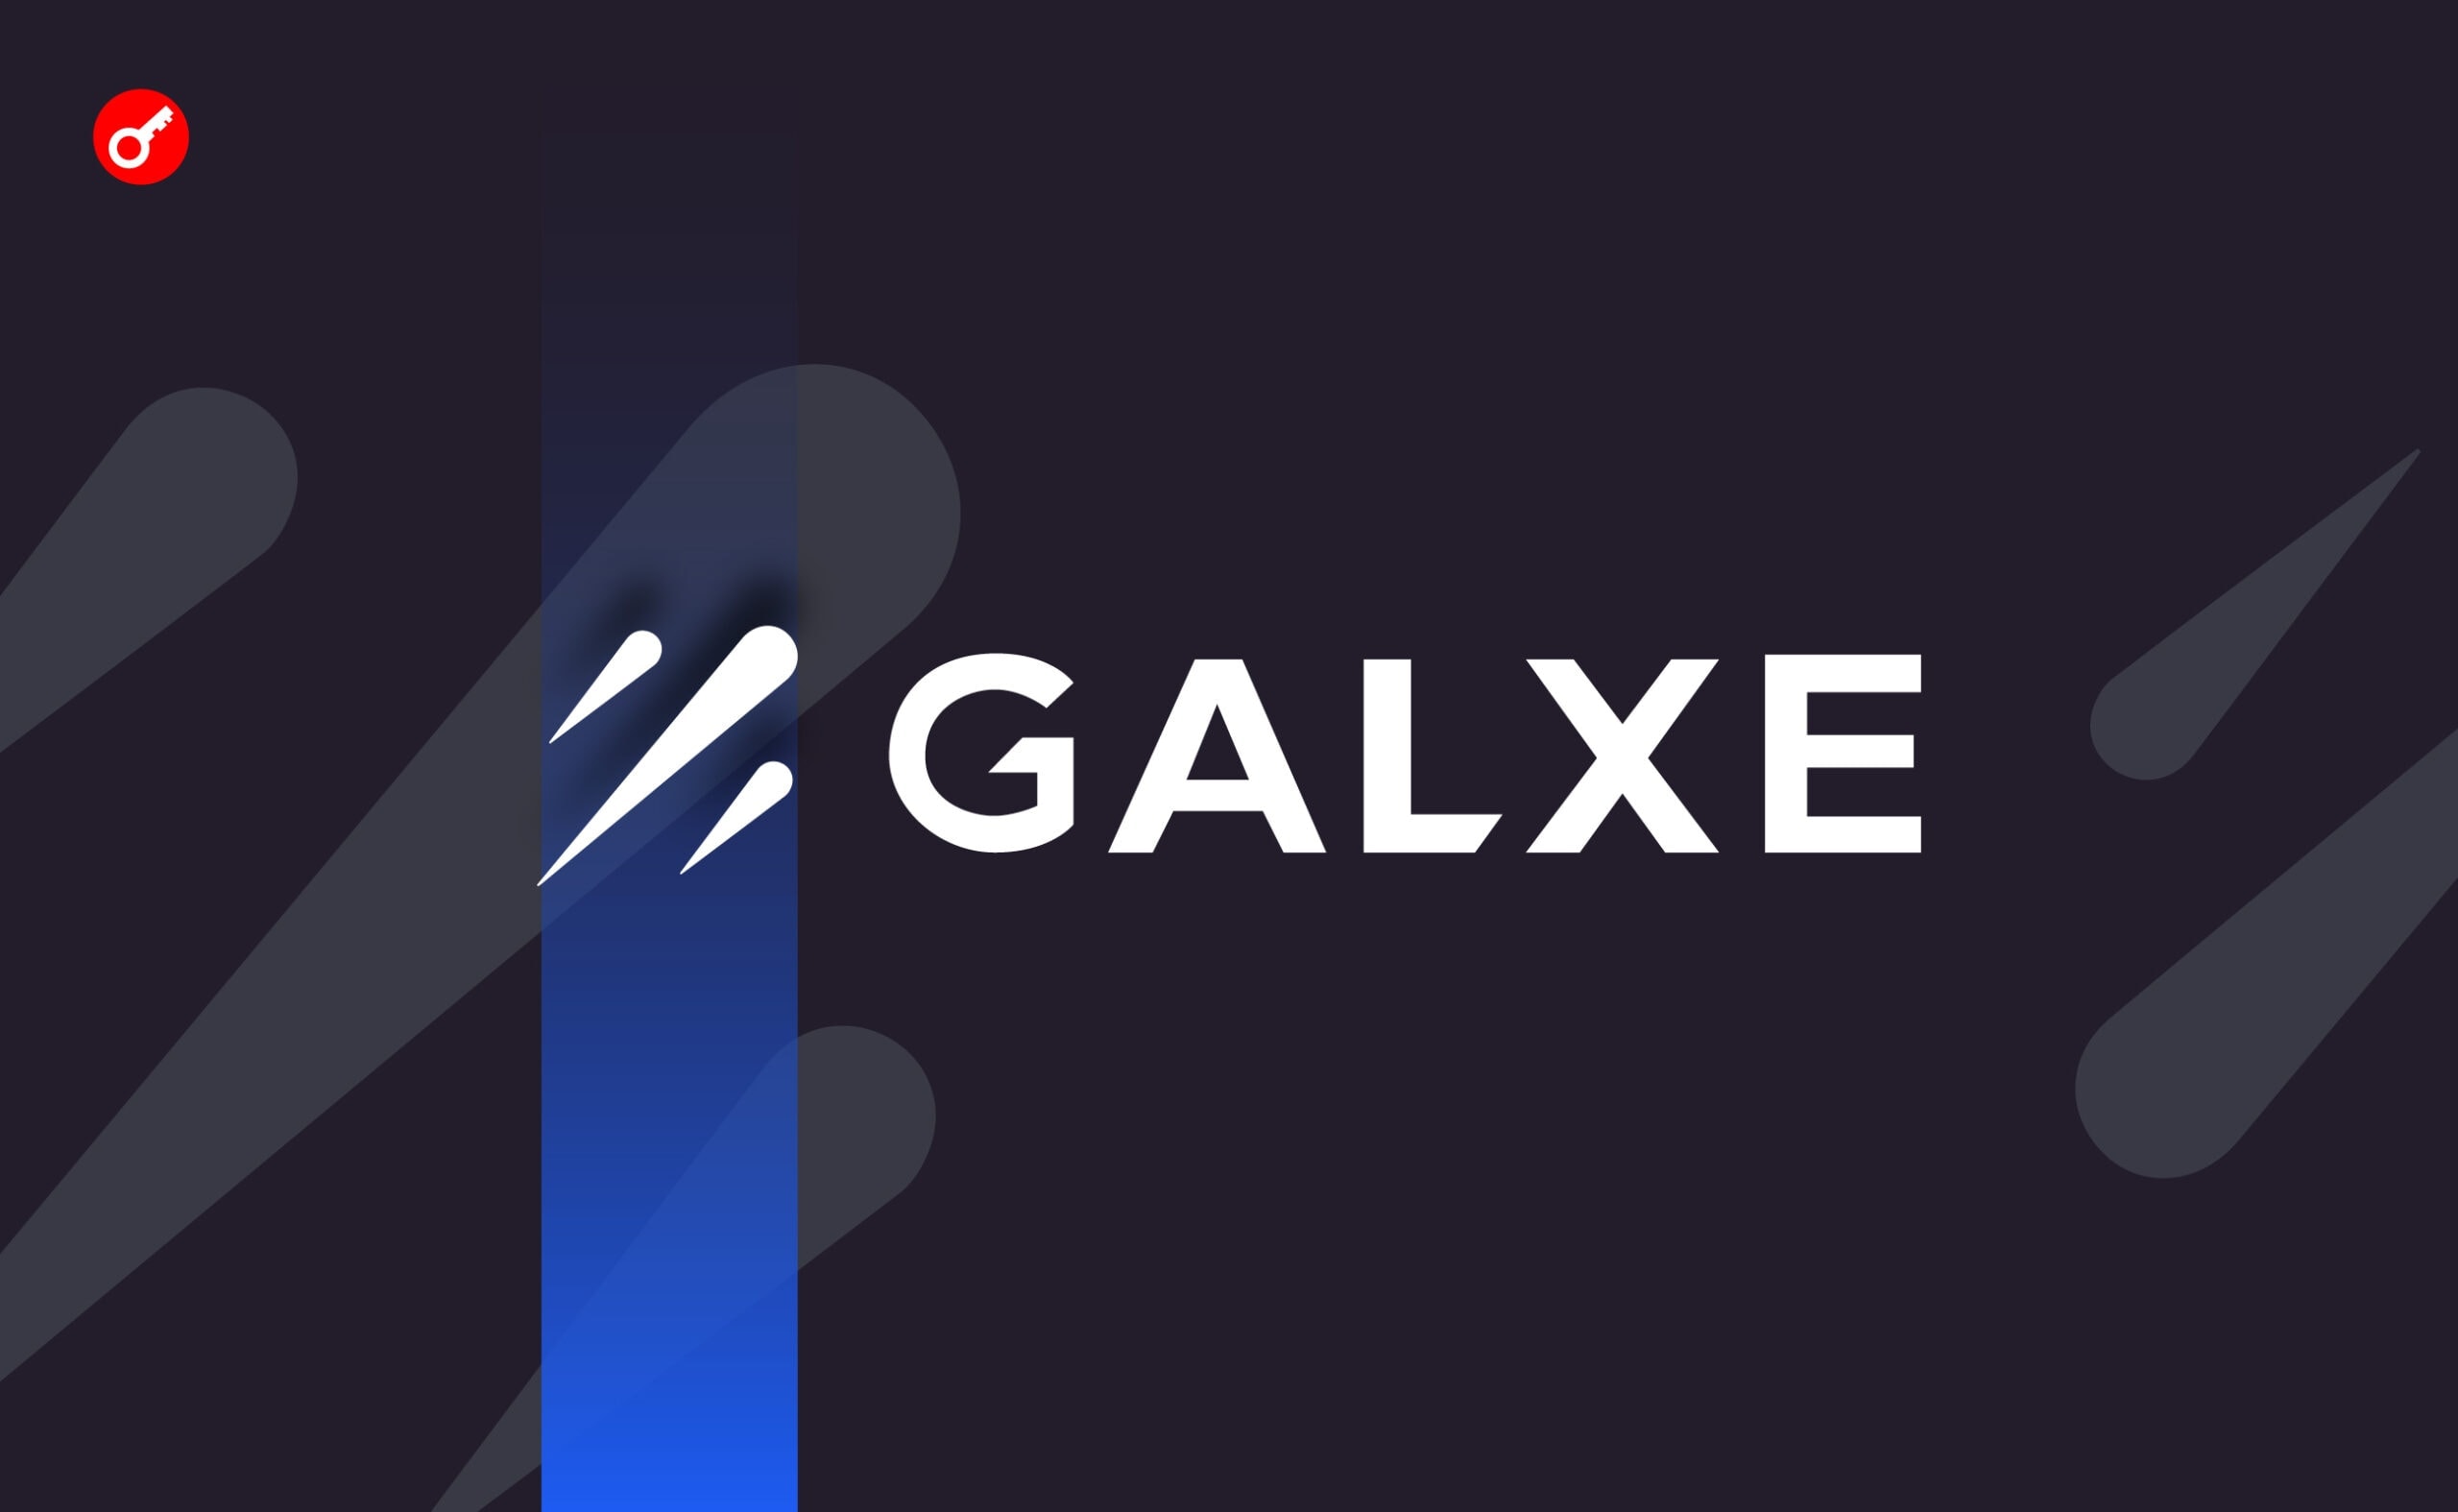 Команда Galxe объявила о возврате средств пострадавшим. Заглавный коллаж новости.